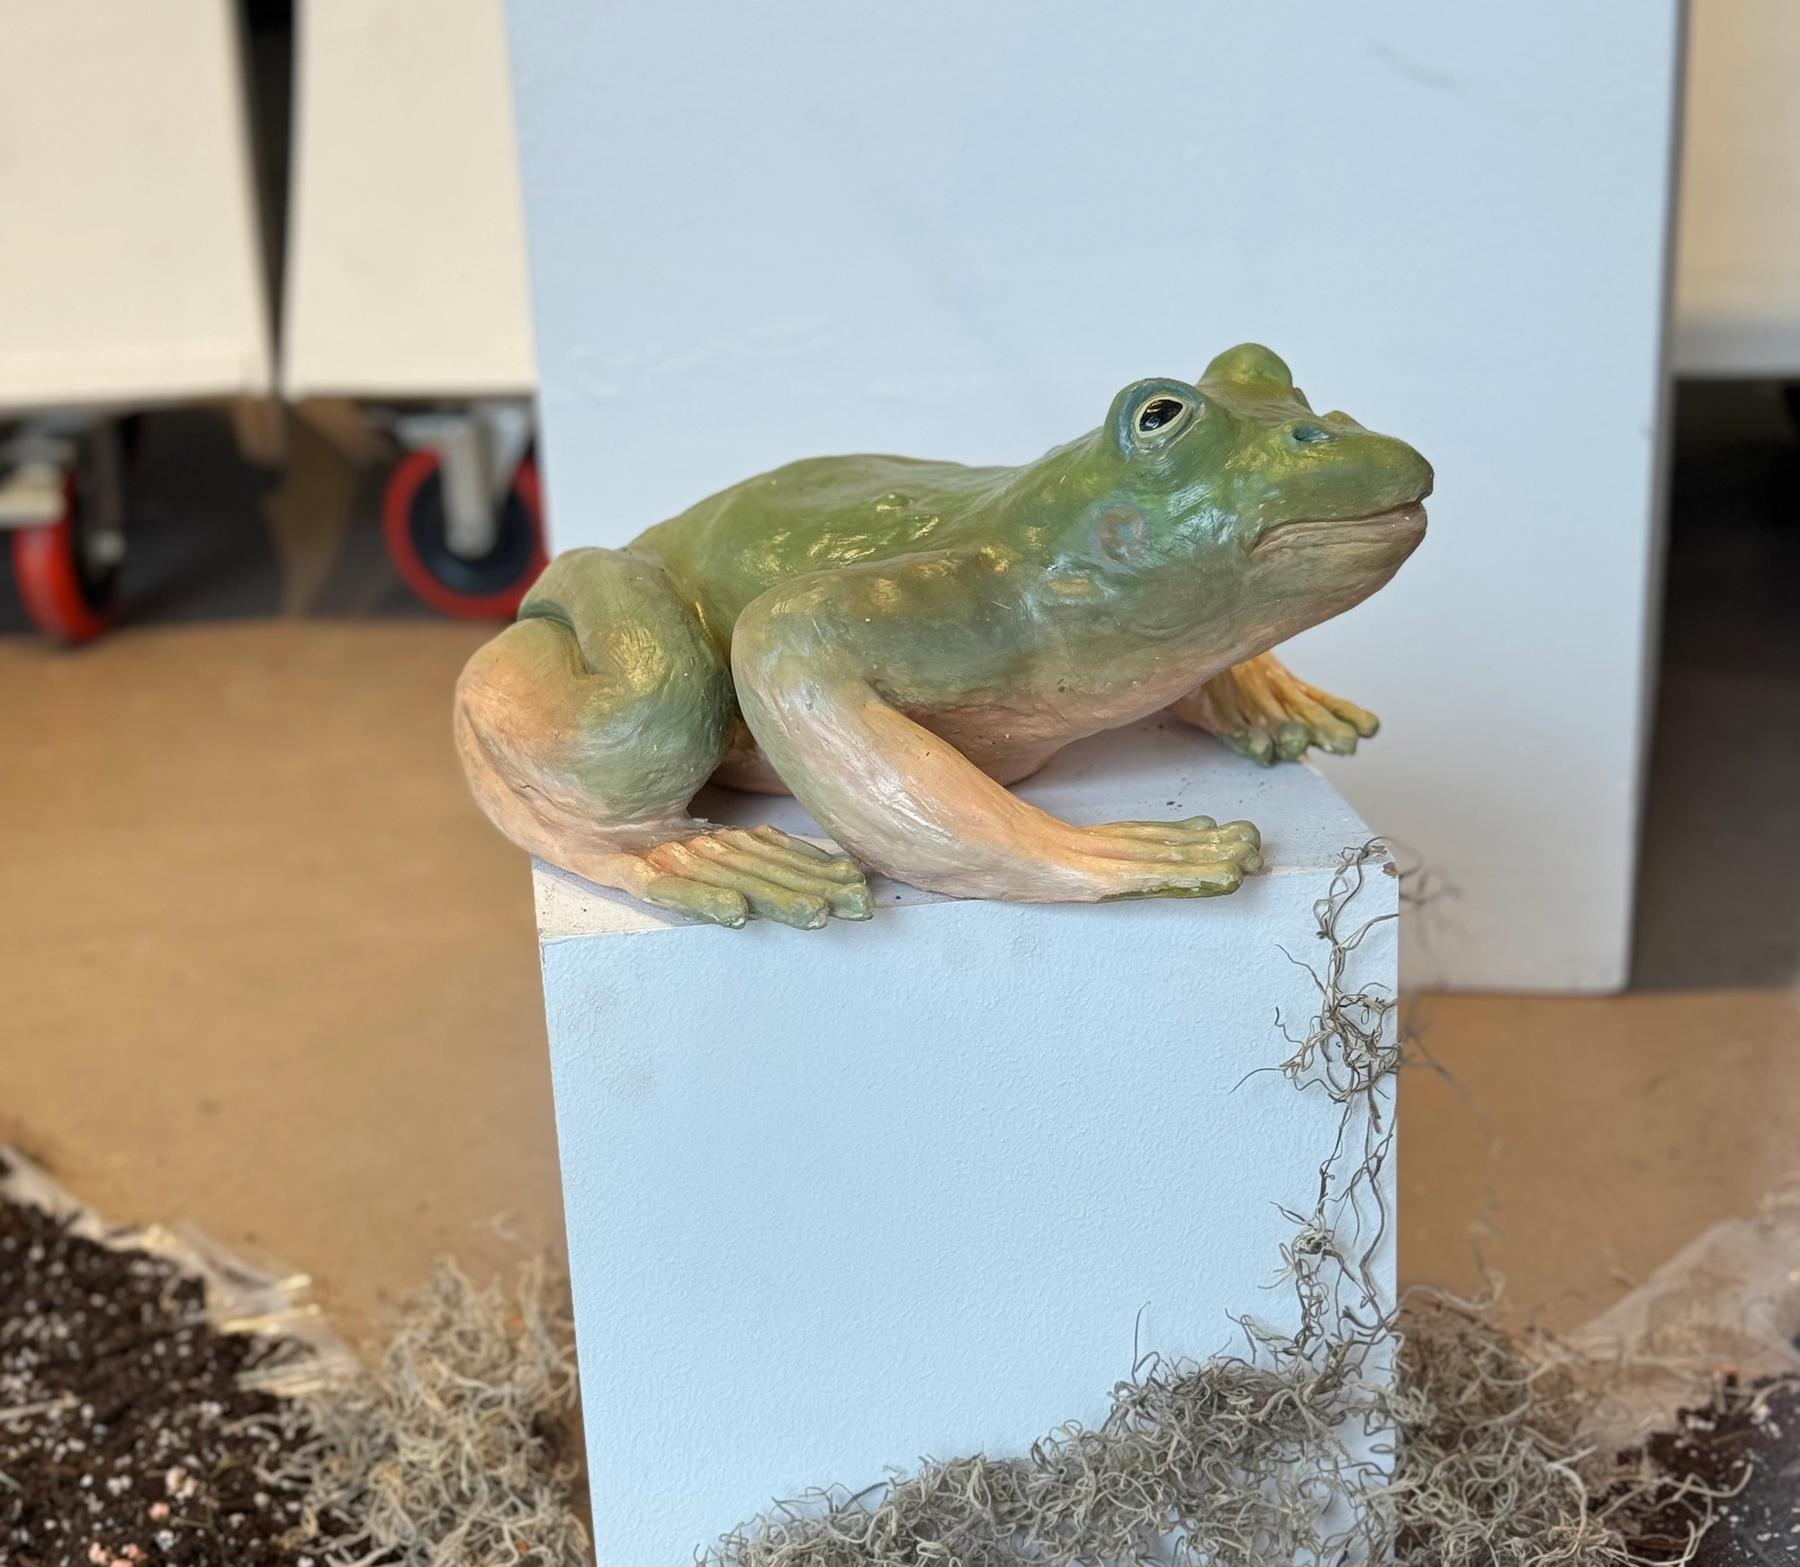 A ceramic sculpture of a frog